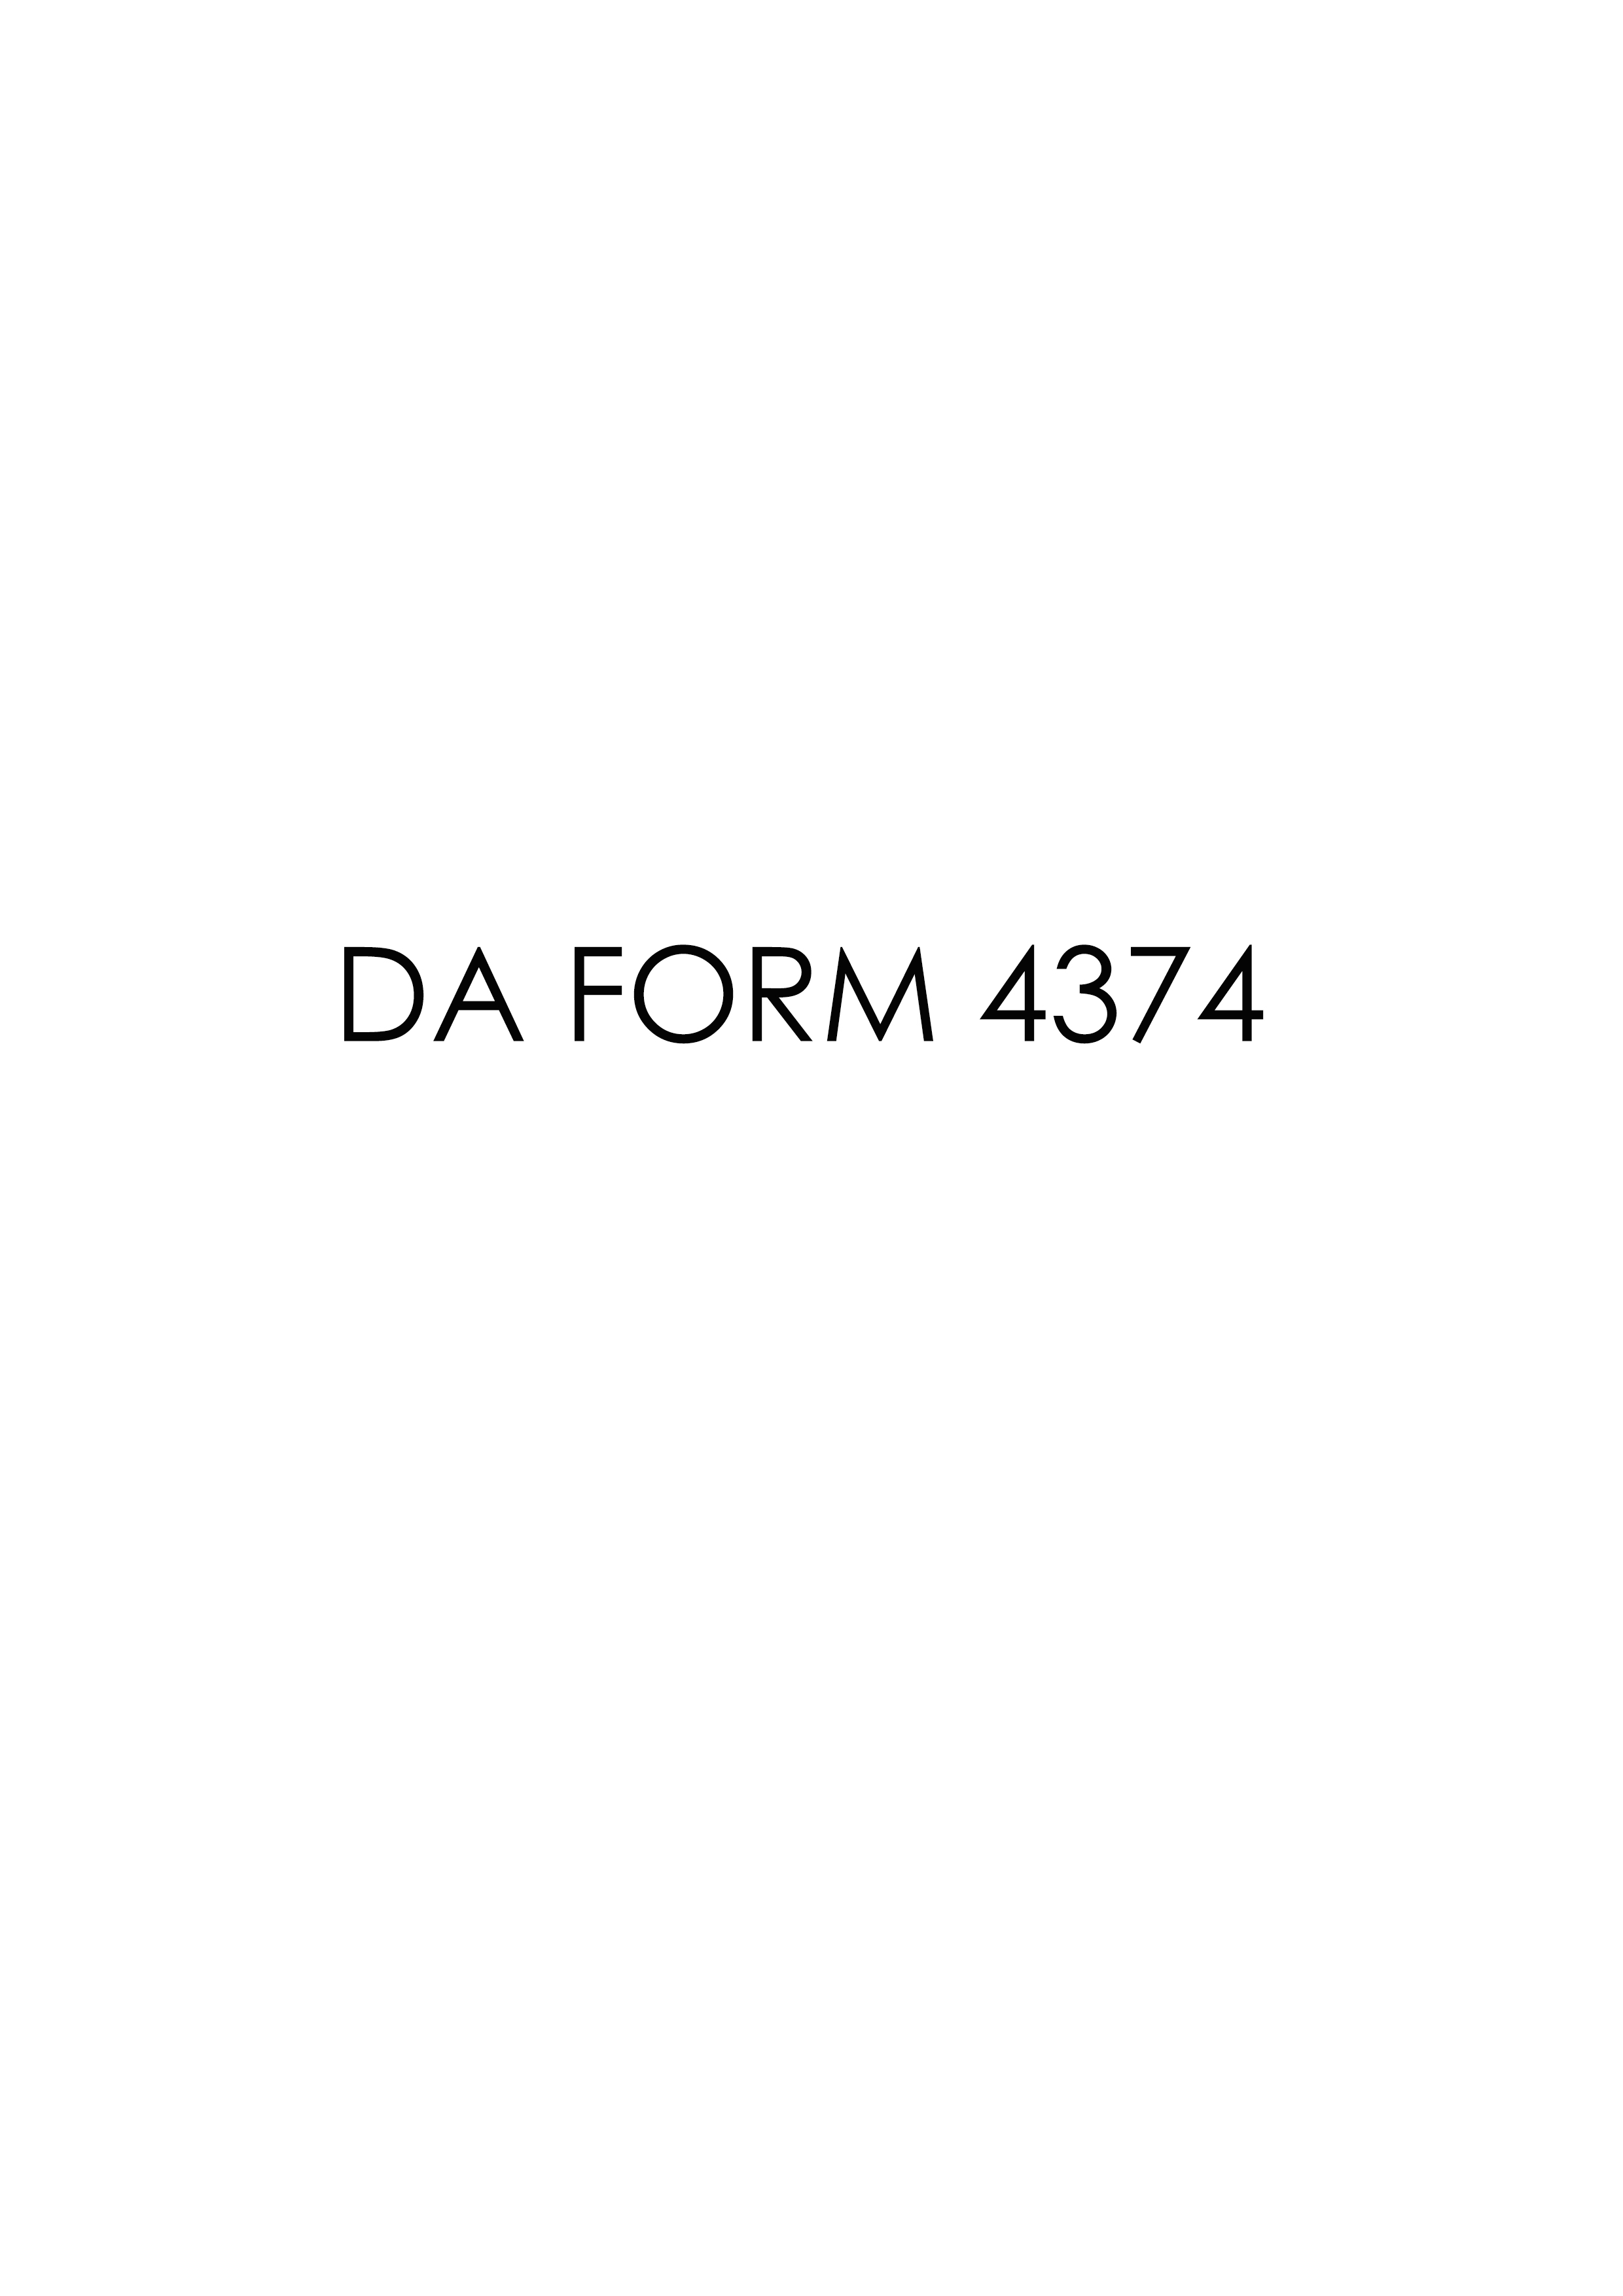 da Form 4374 fillable